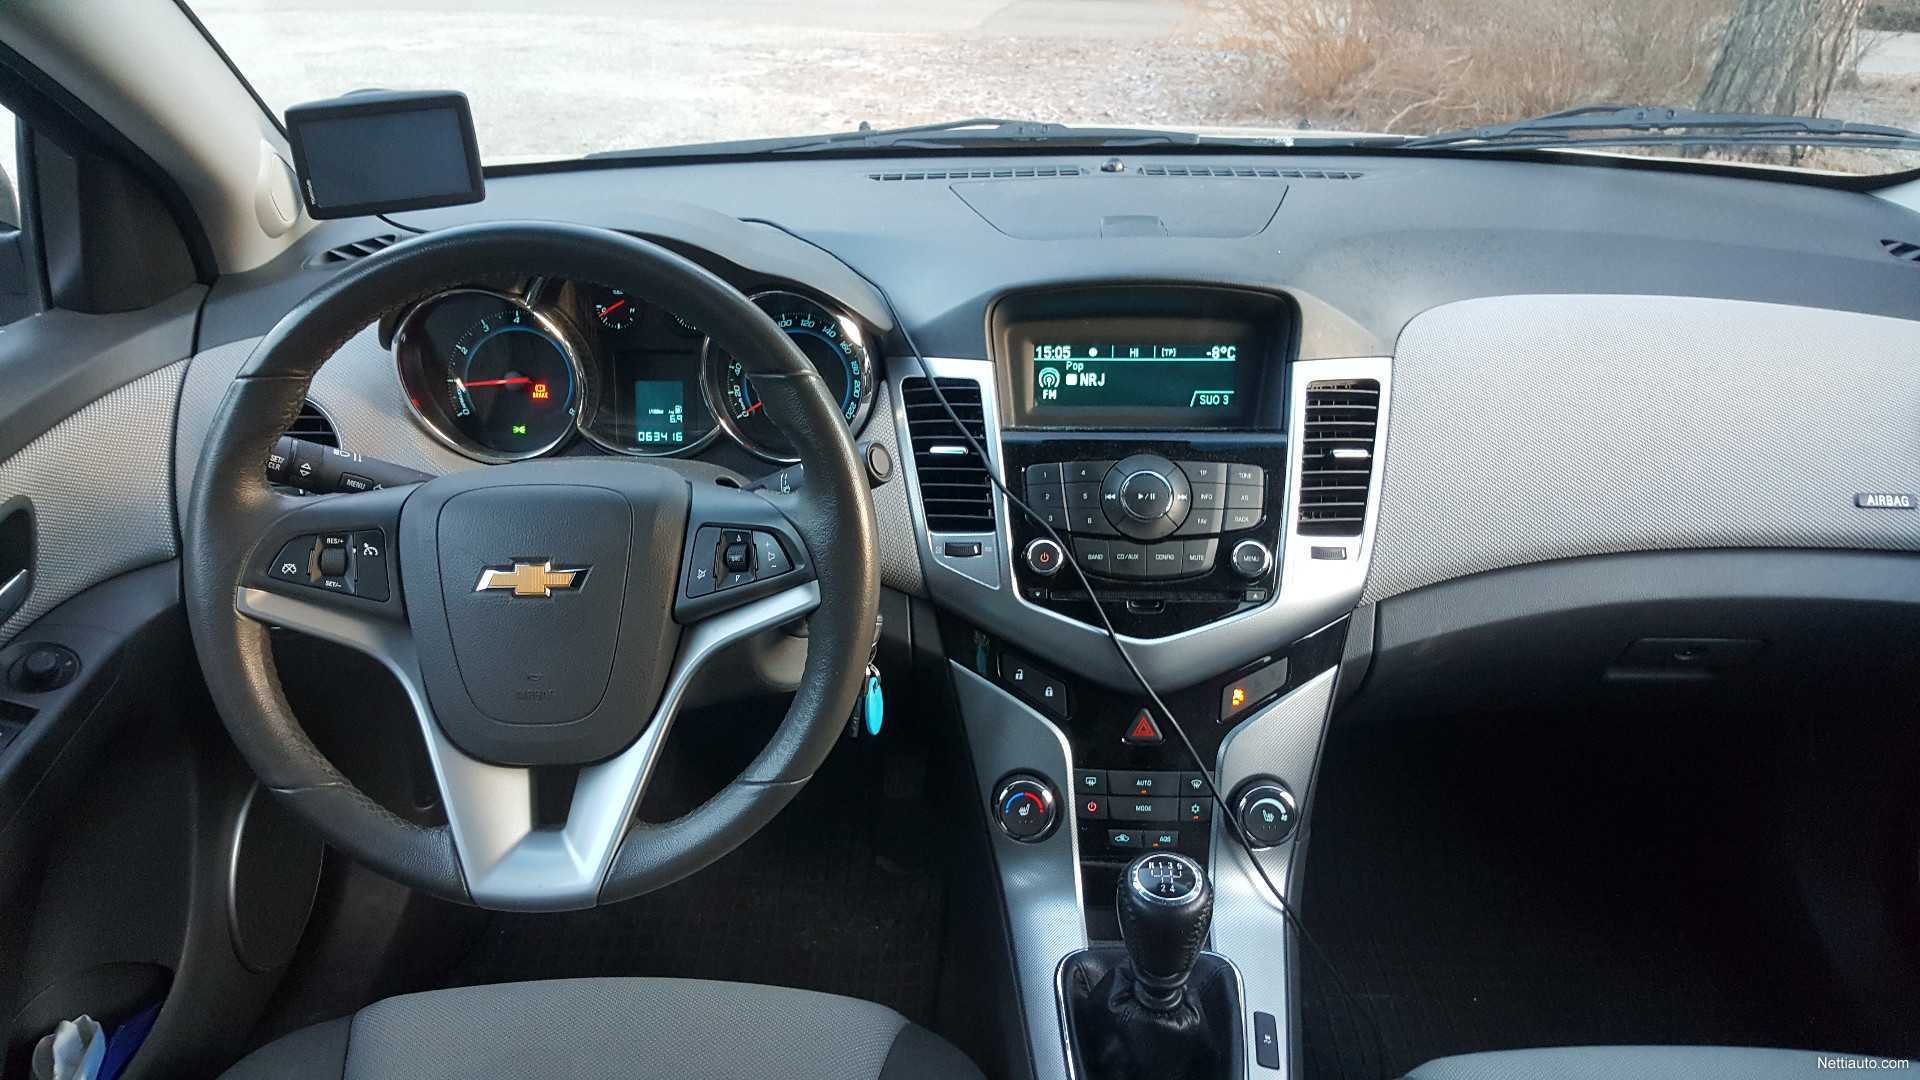 Chevrolet cruze - характеристики, комплектации, фото, видео, обзор